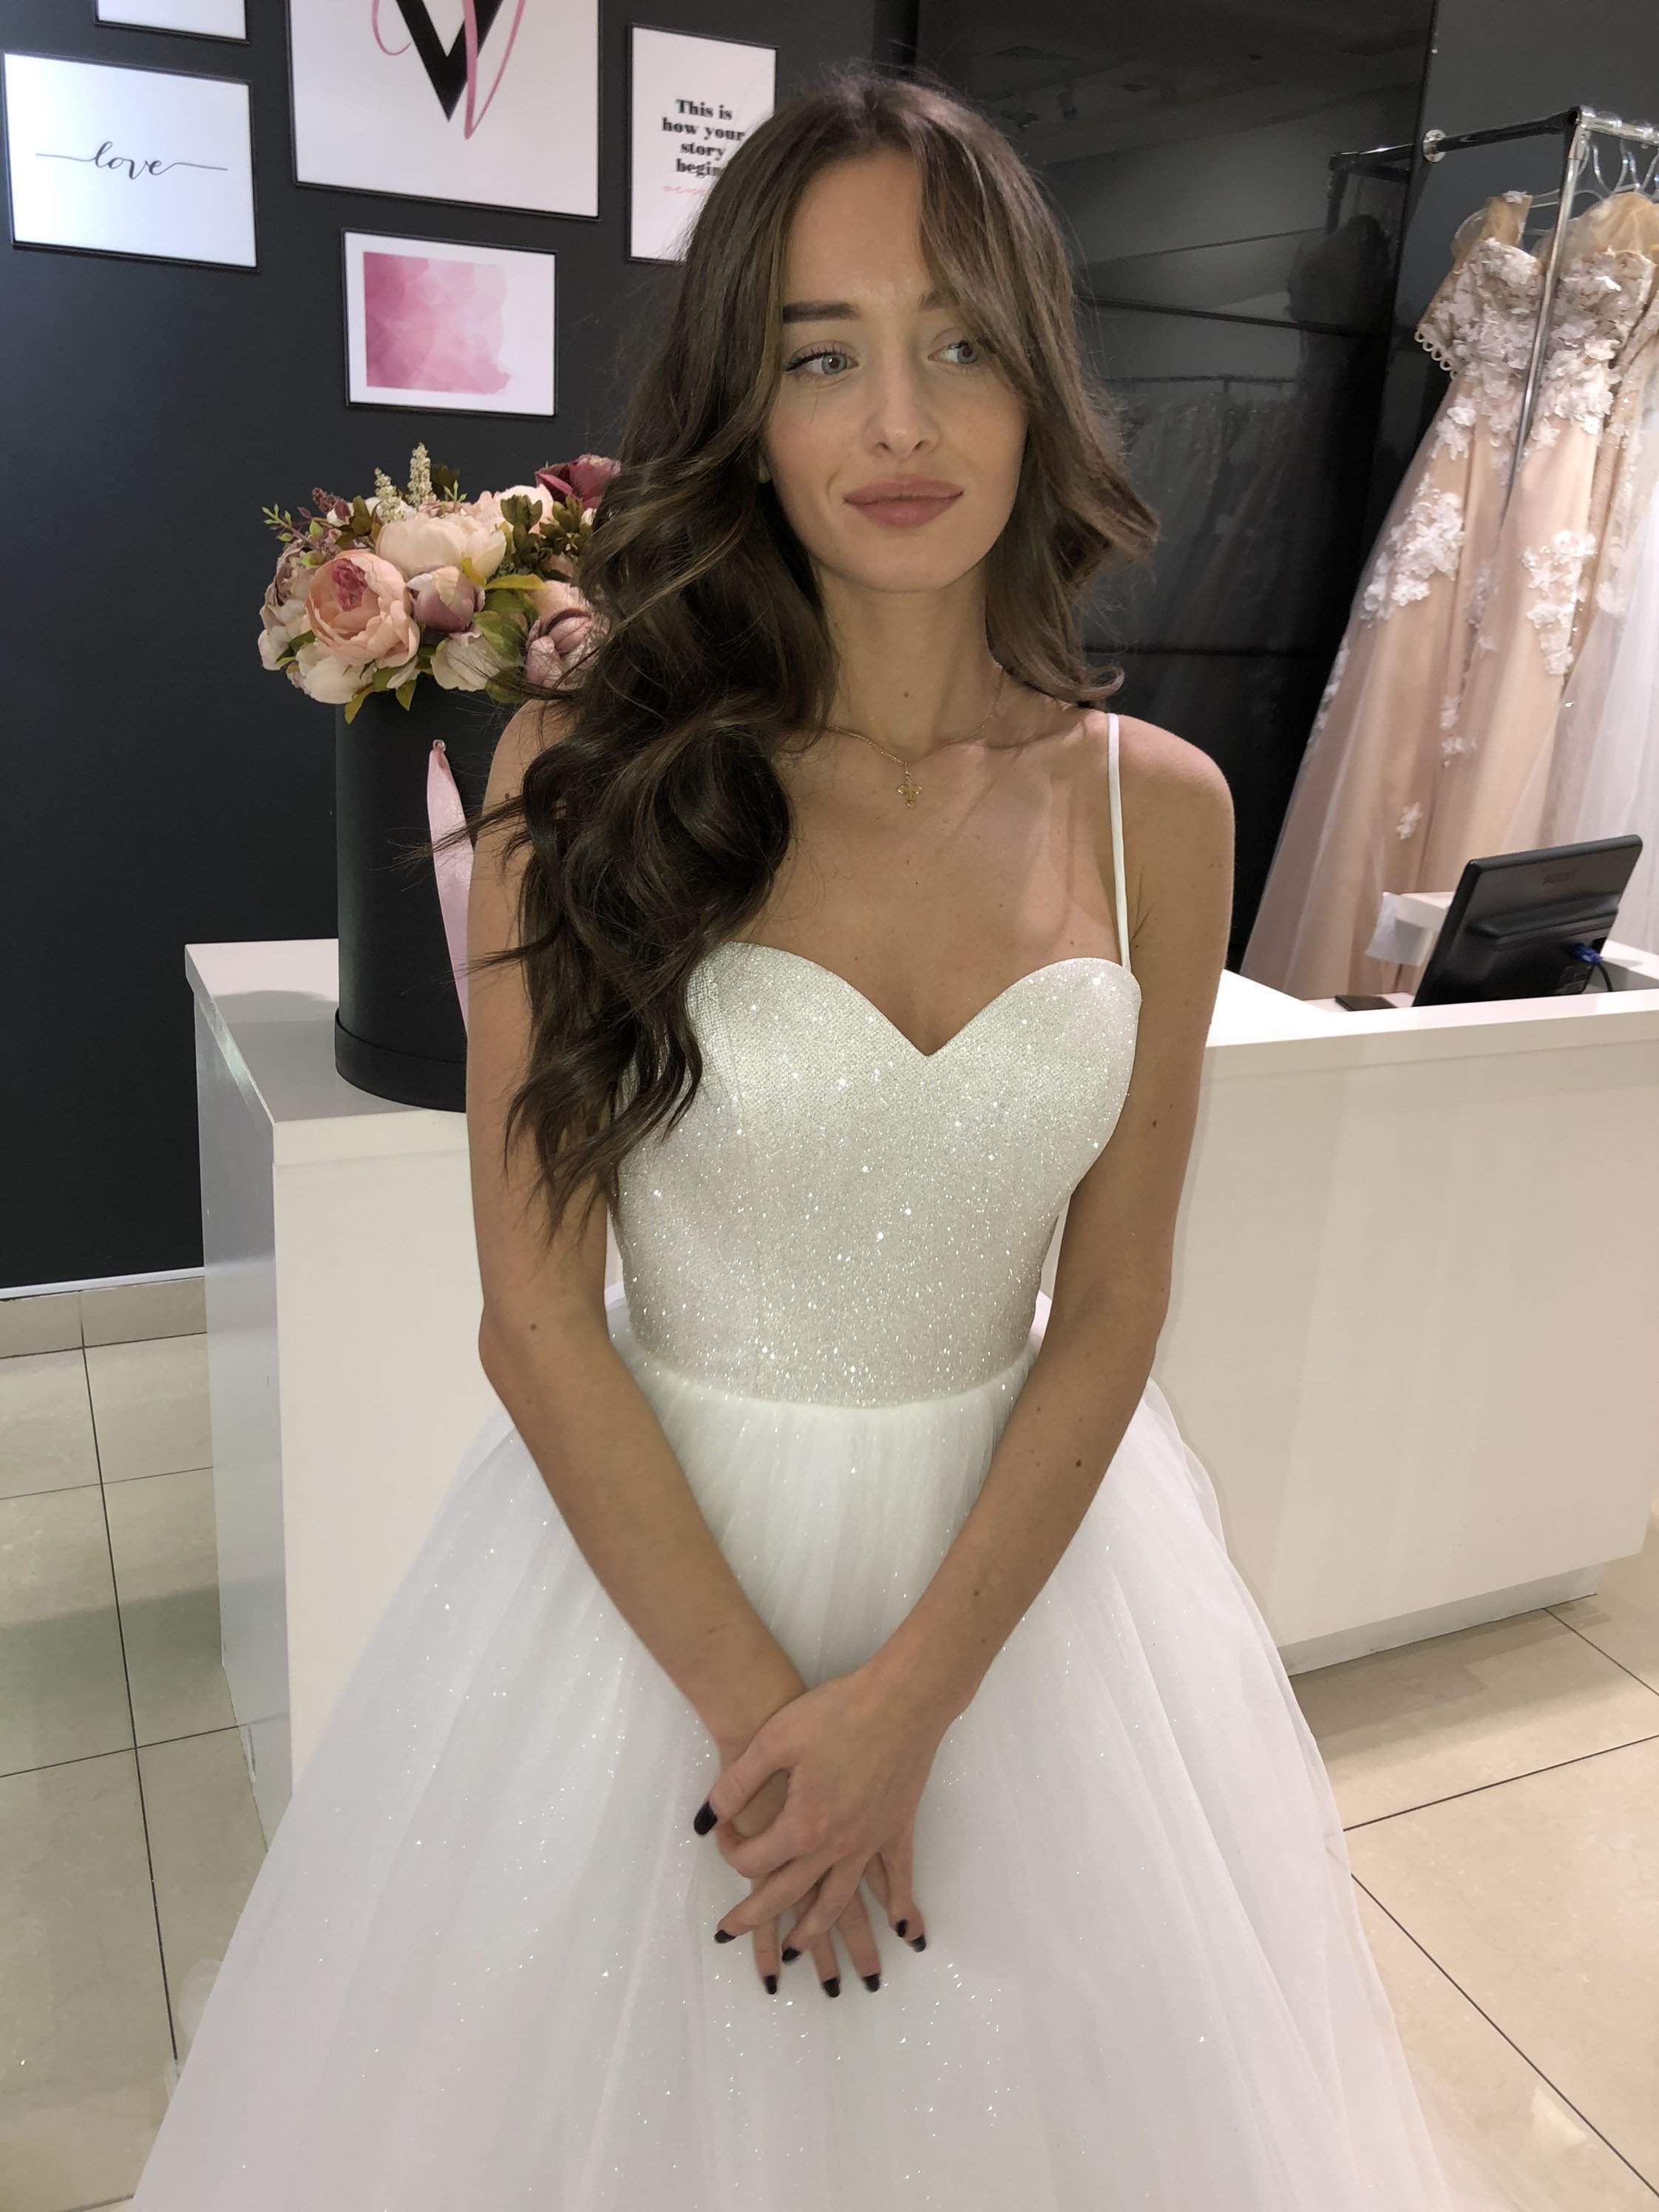 Sweetheart Neckline Wedding Dress Klouzi with spaghetti straps – Olivia  Bottega